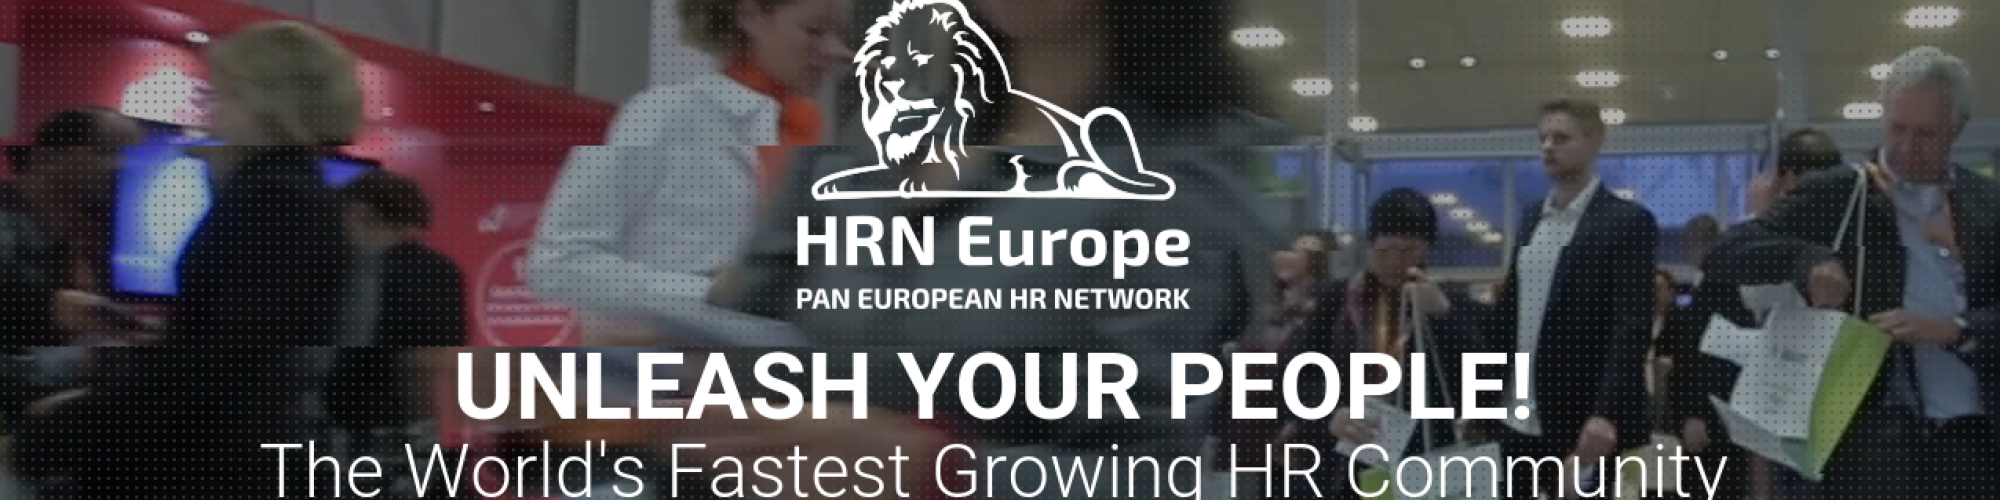 HRN Europe